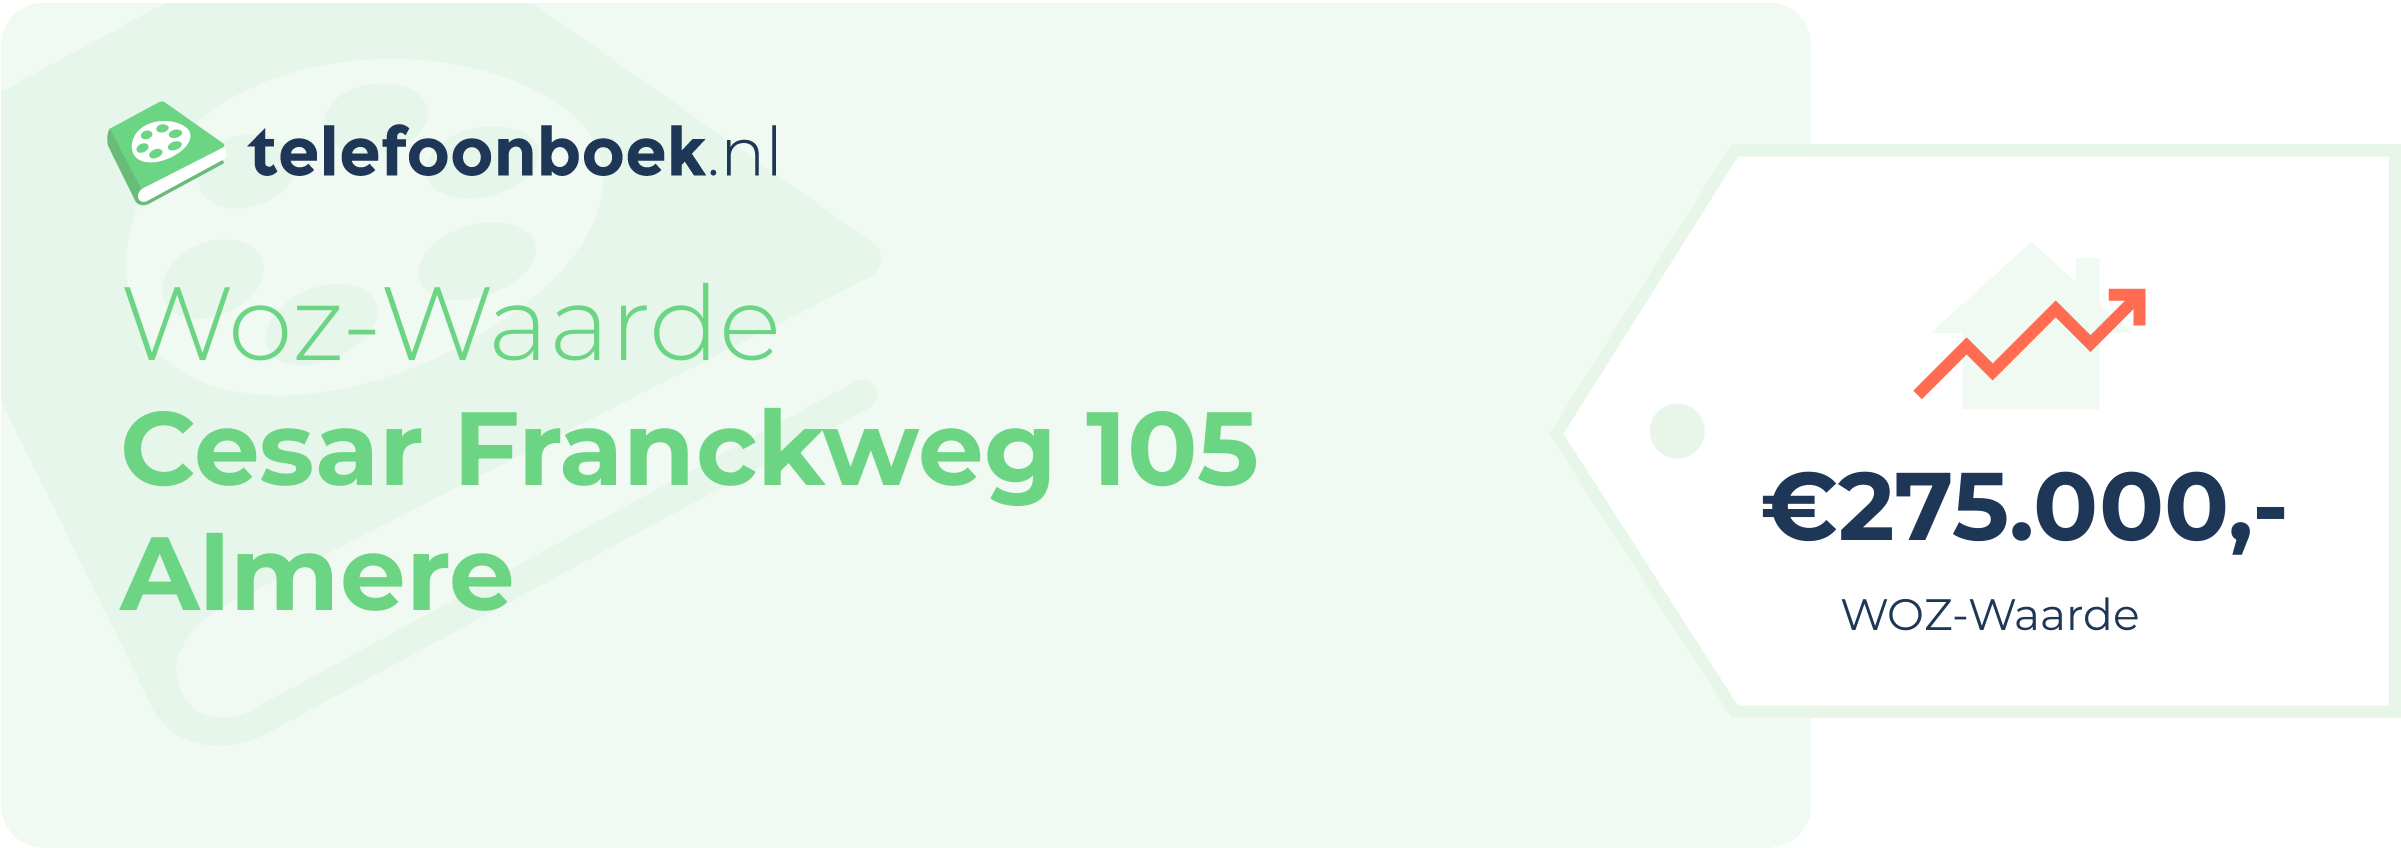 WOZ-waarde Cesar Franckweg 105 Almere